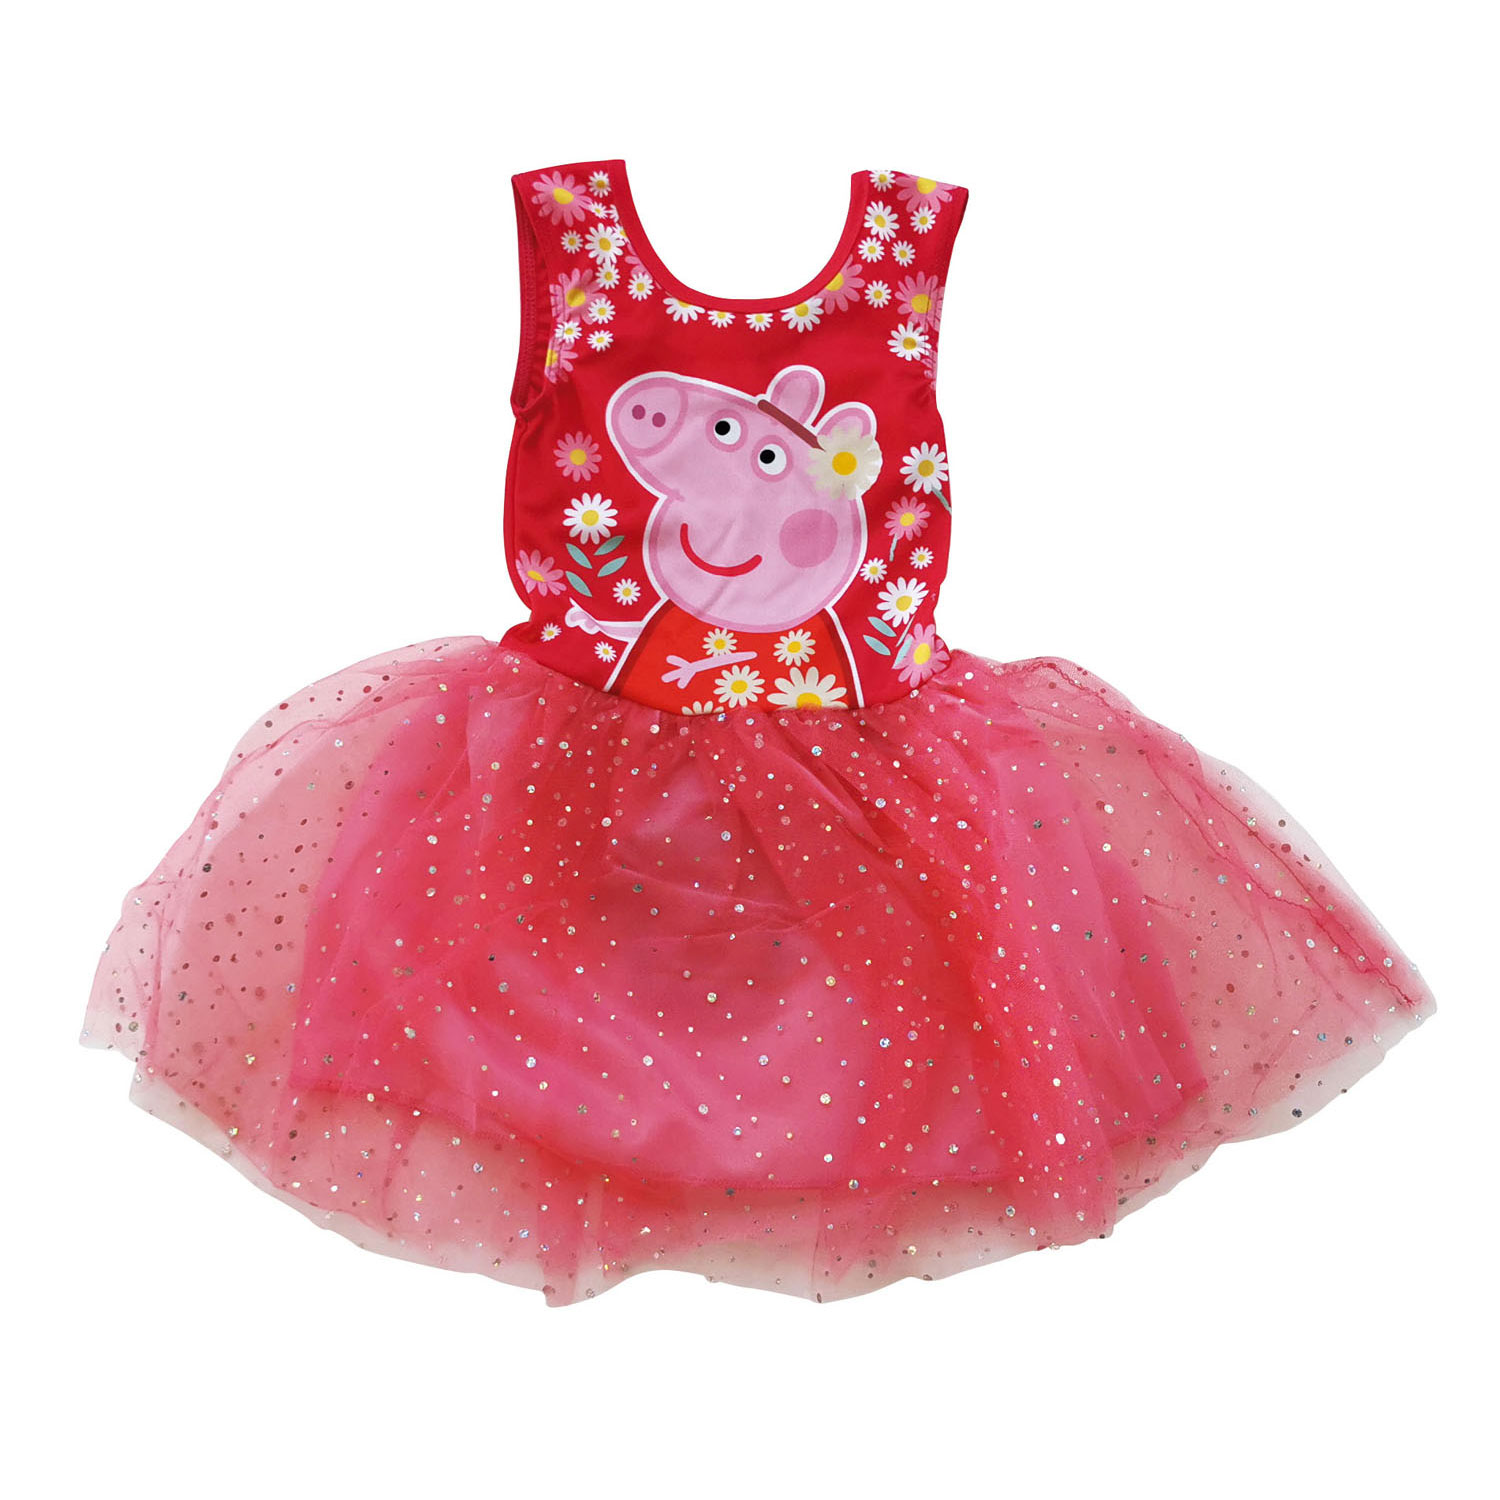 dress Peppa Pig, years | Thimble Toys